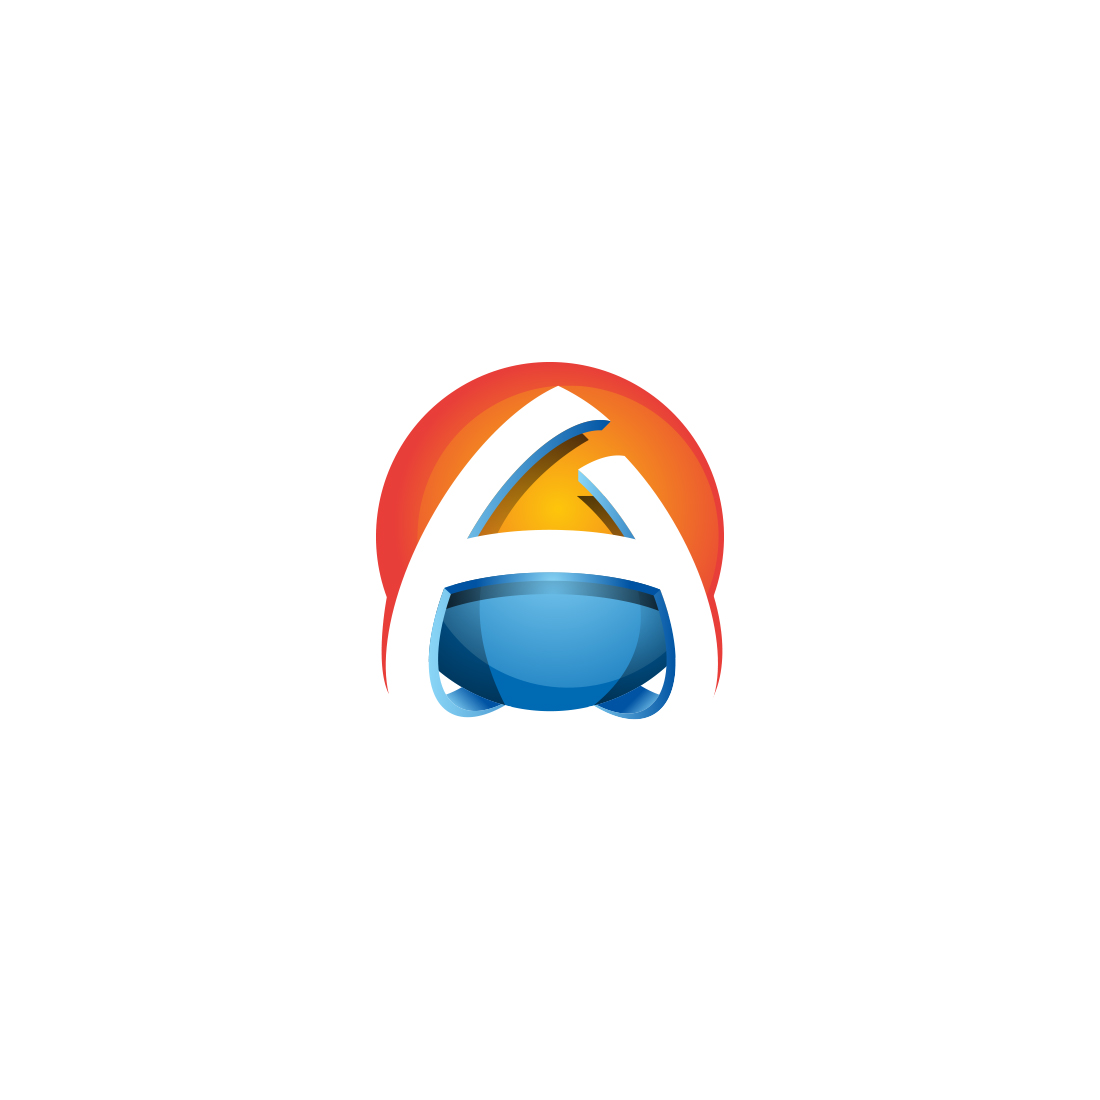 A Letter 3D Logo Design preview image.